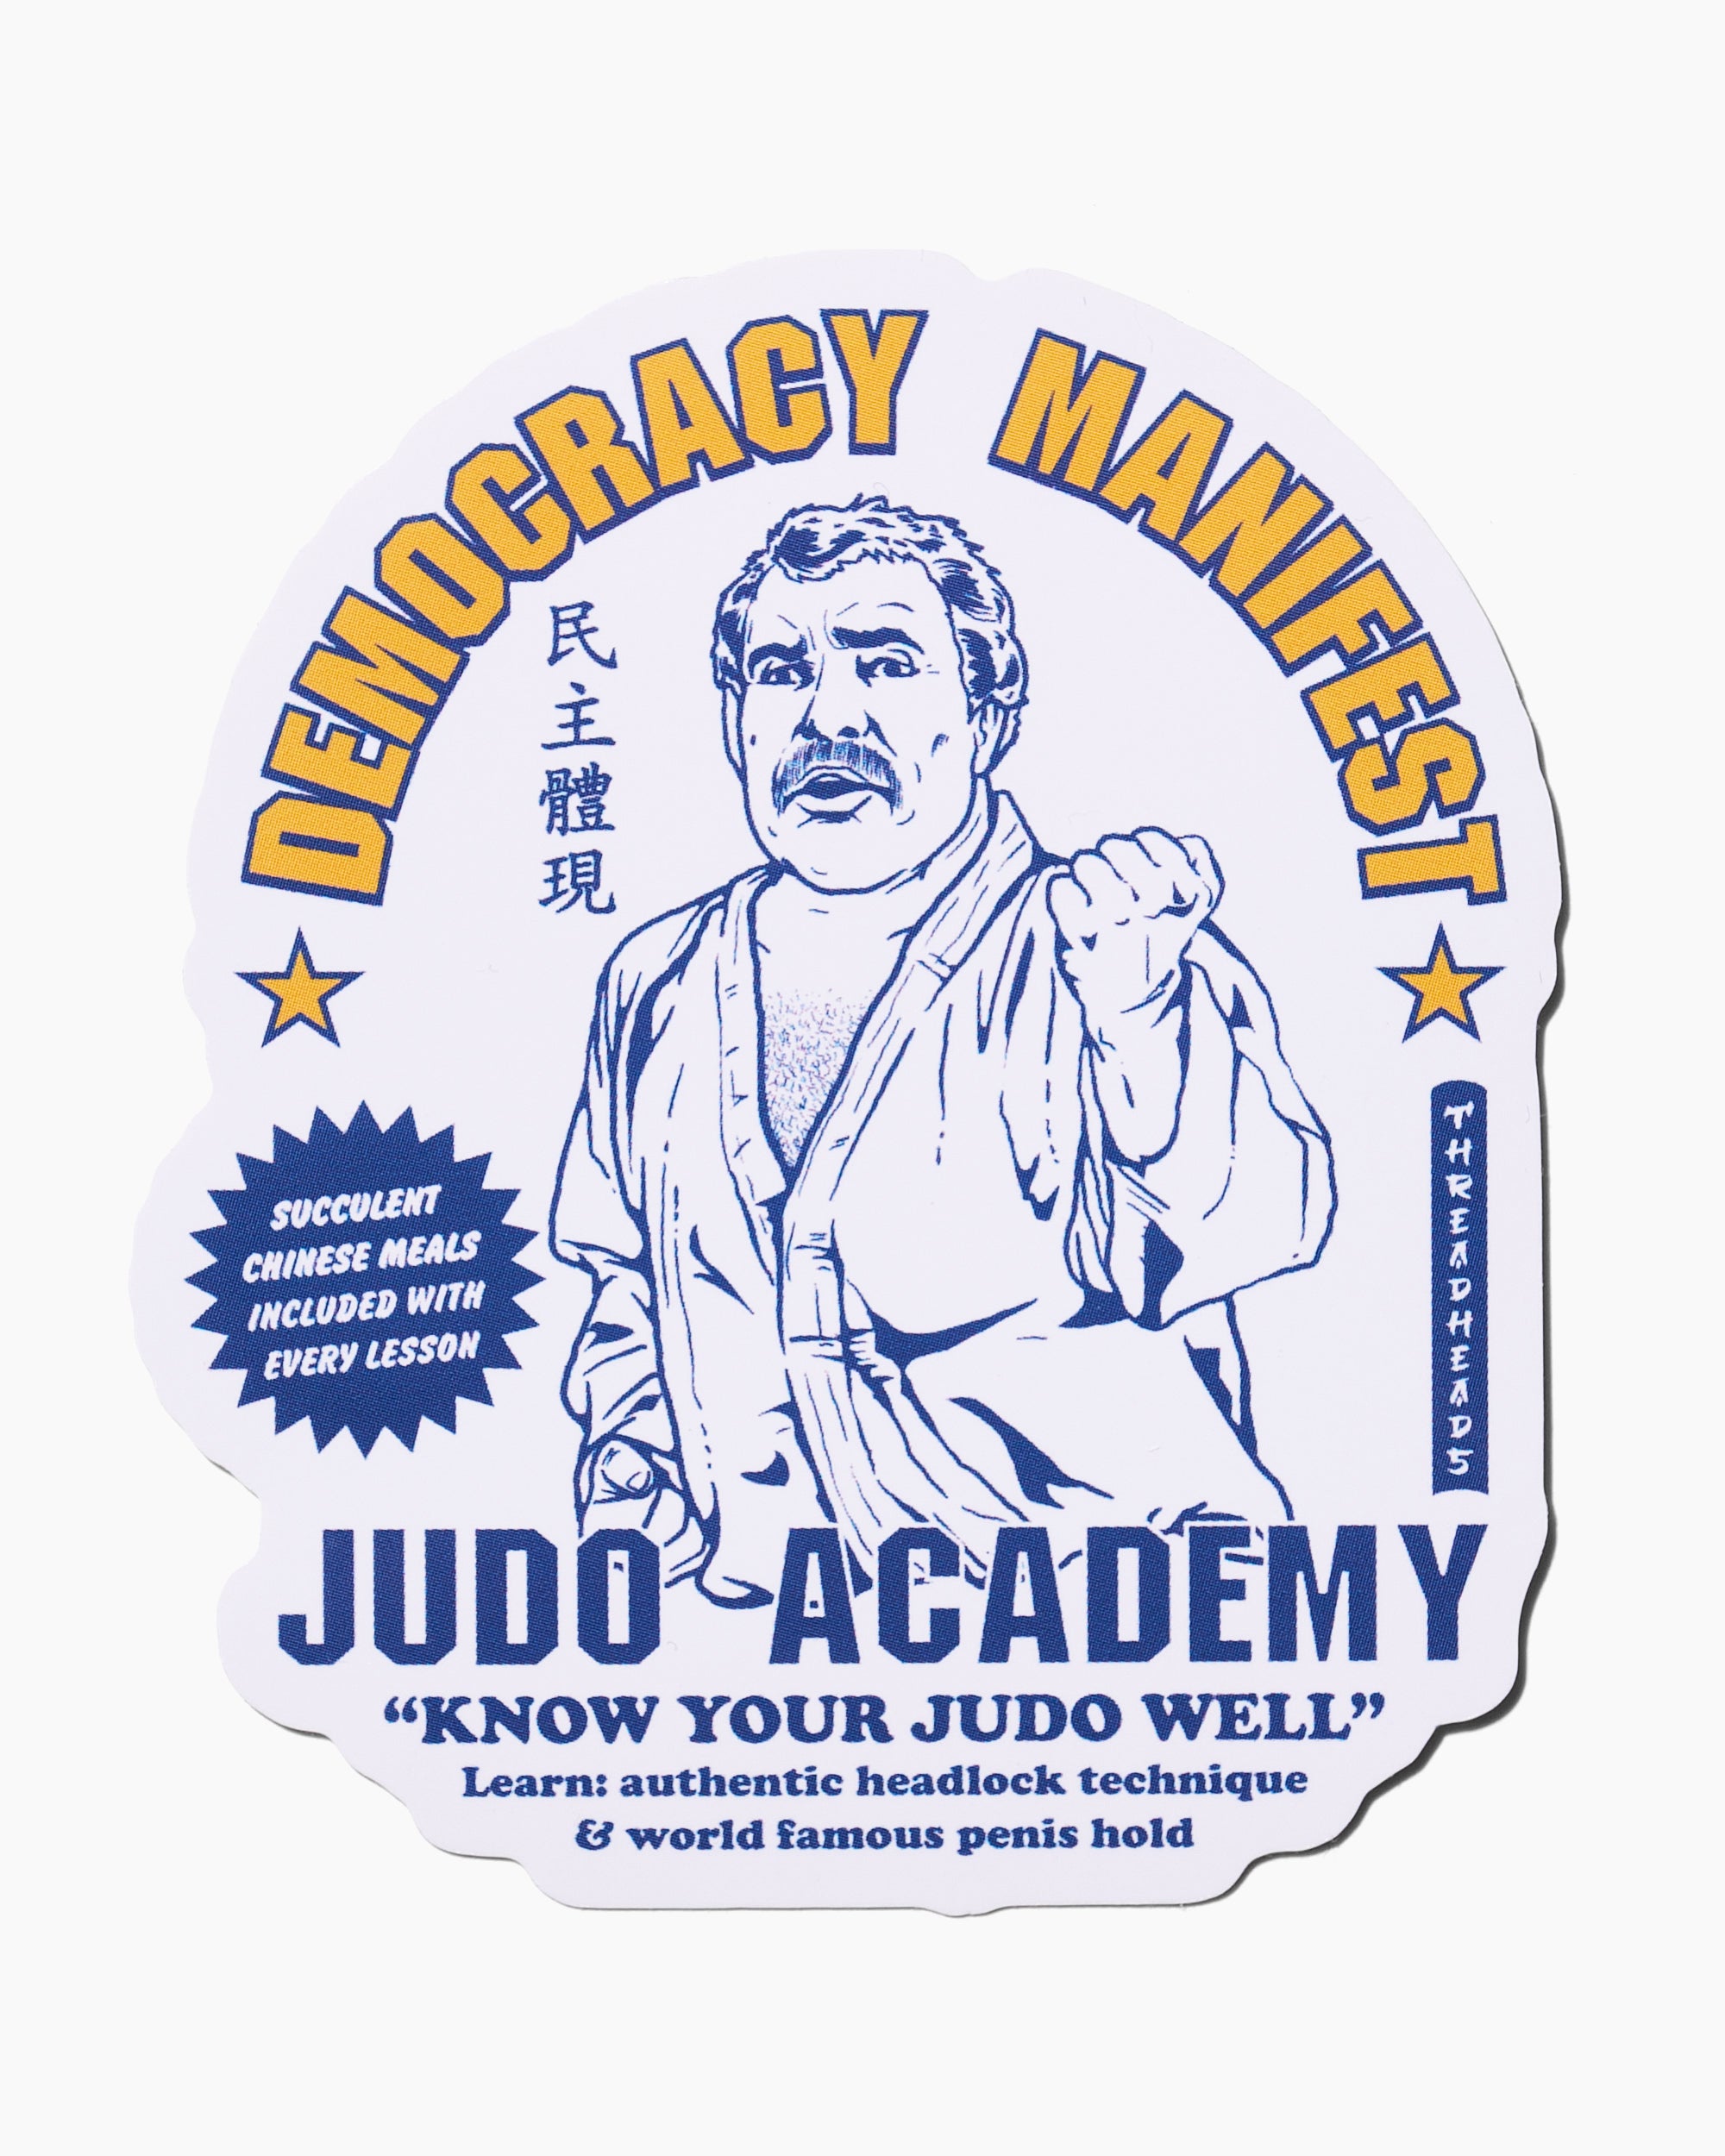 The Democracy Manifest Sticker Pack